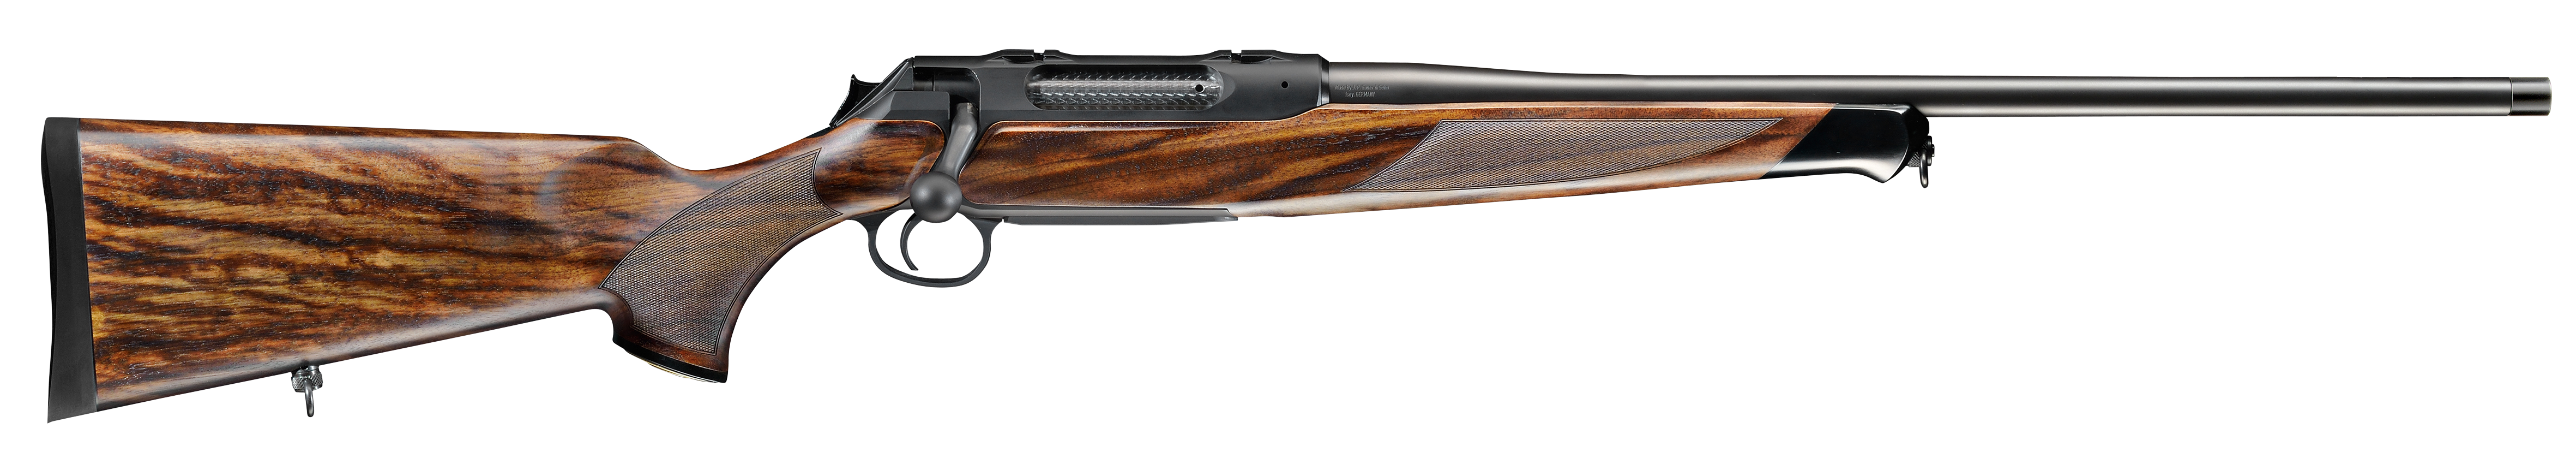 Sauer 404 Select SR 6,5x55 kivääri 